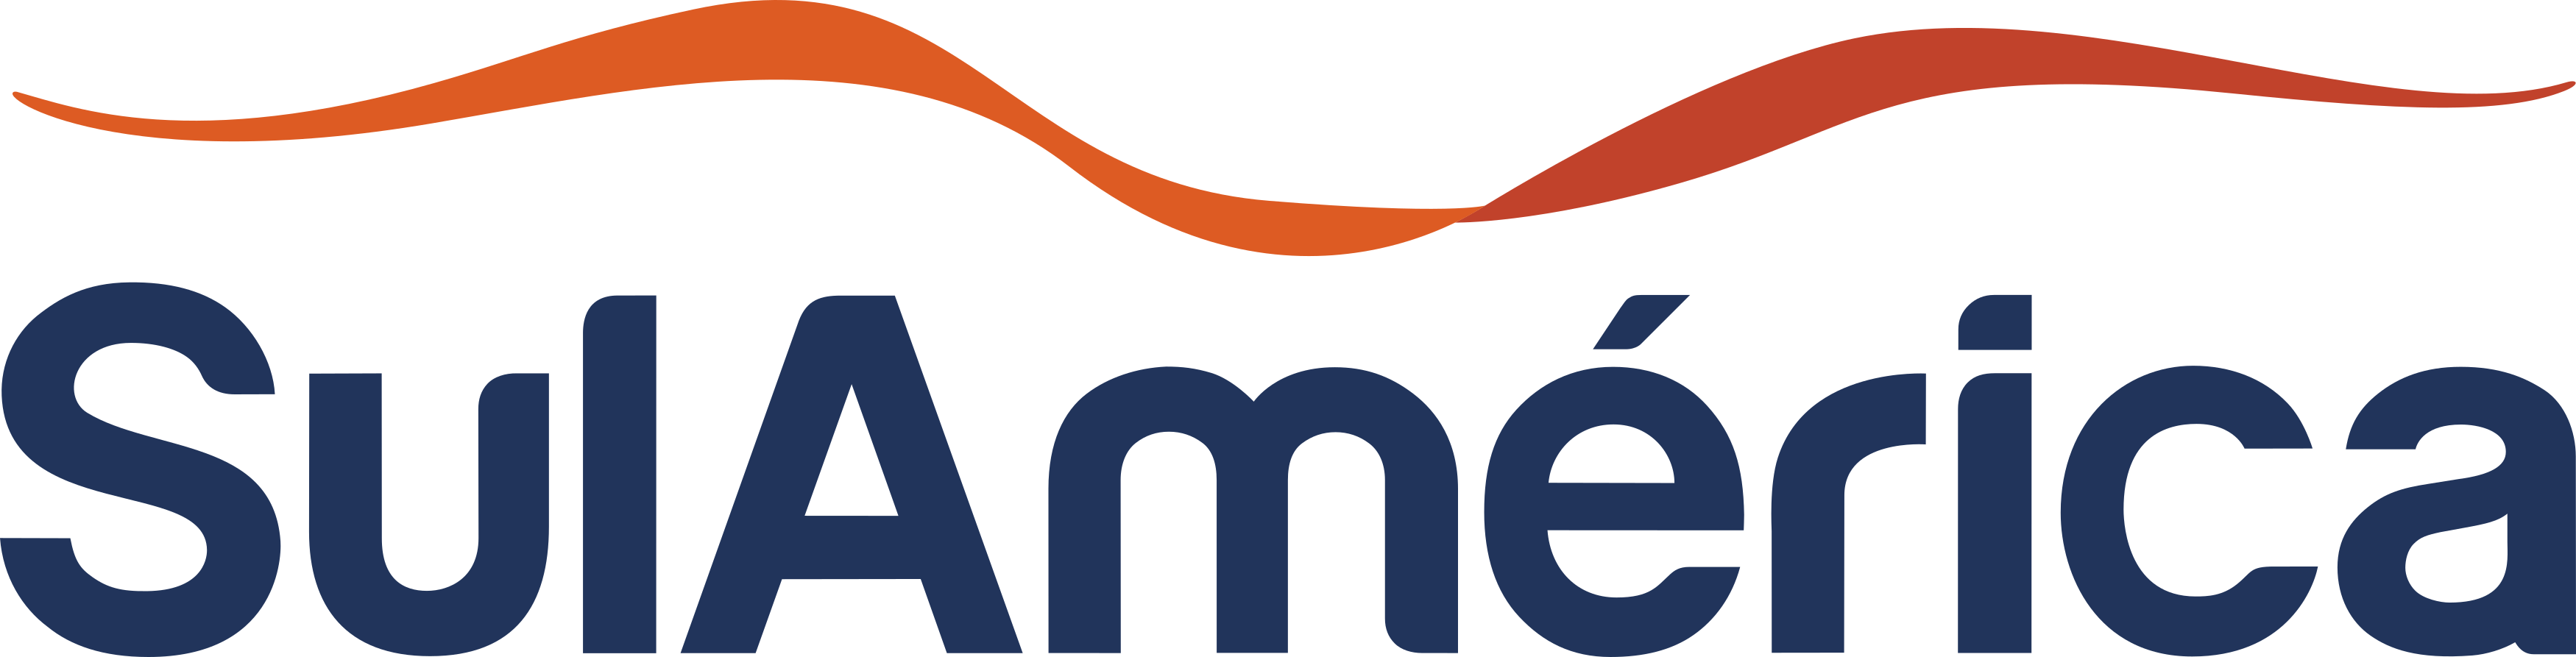 sulamerica-logo (1)